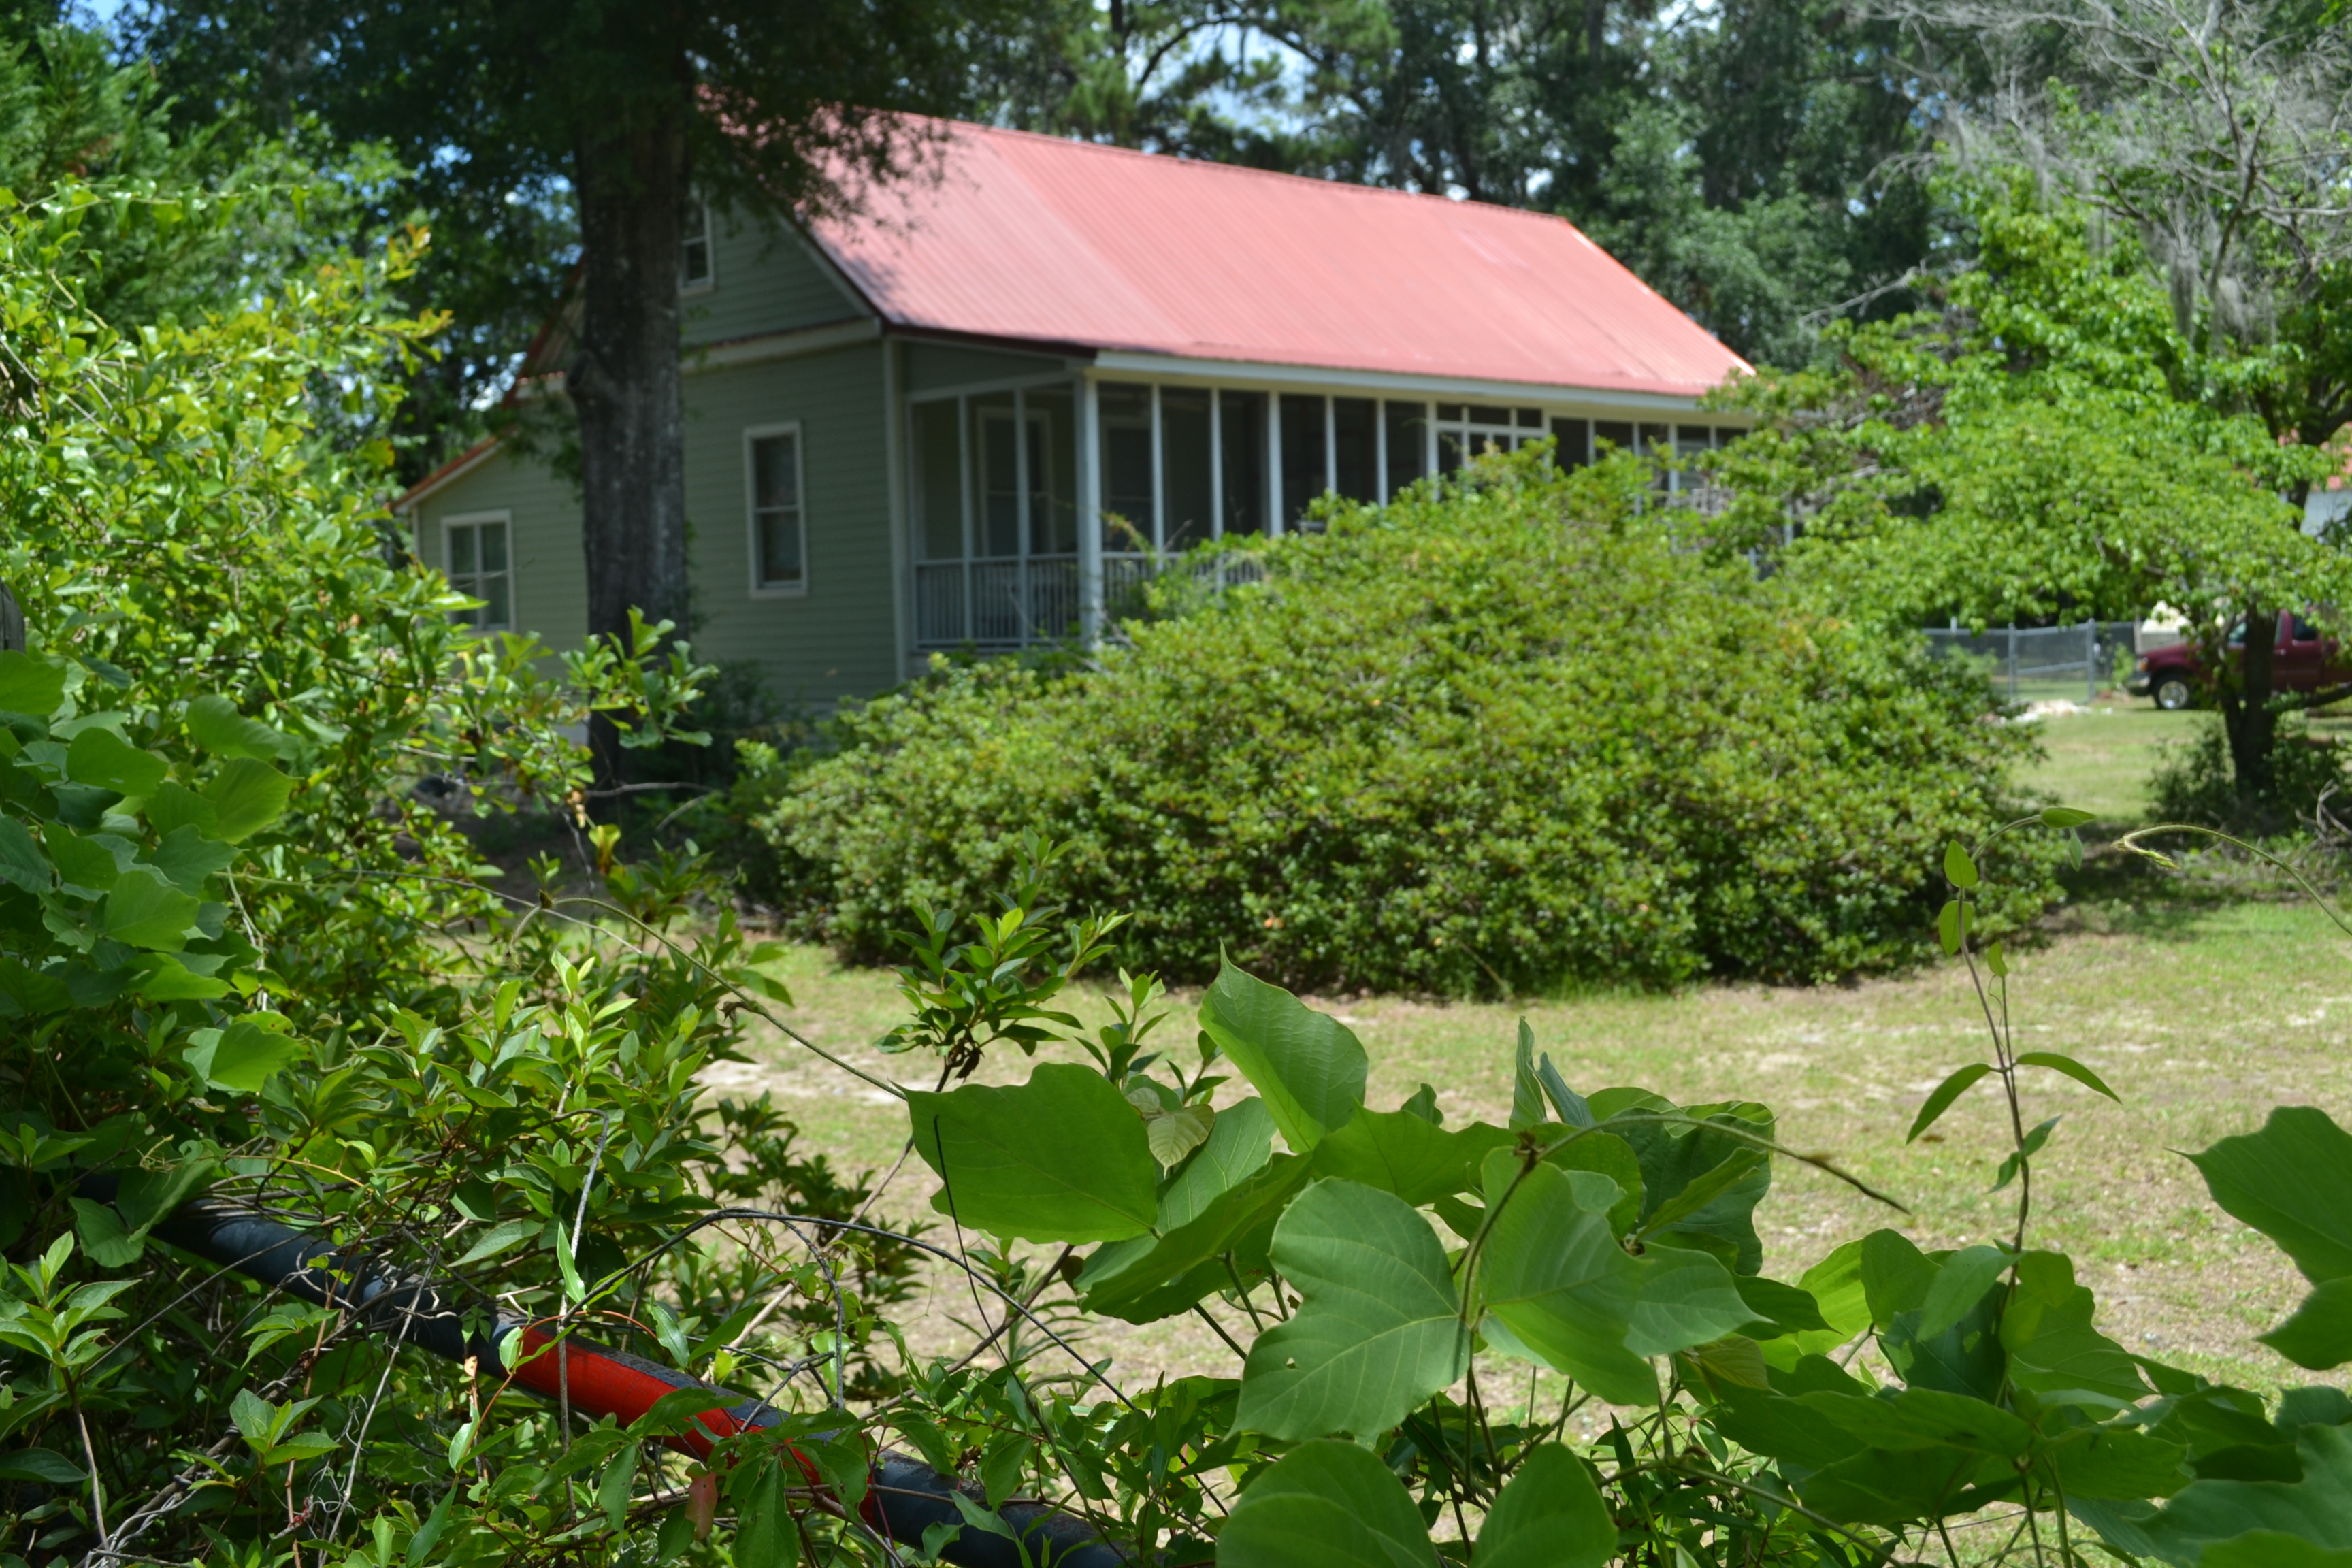 Image of the Marshall Plantation home at Adams Run, S.C. - 2017